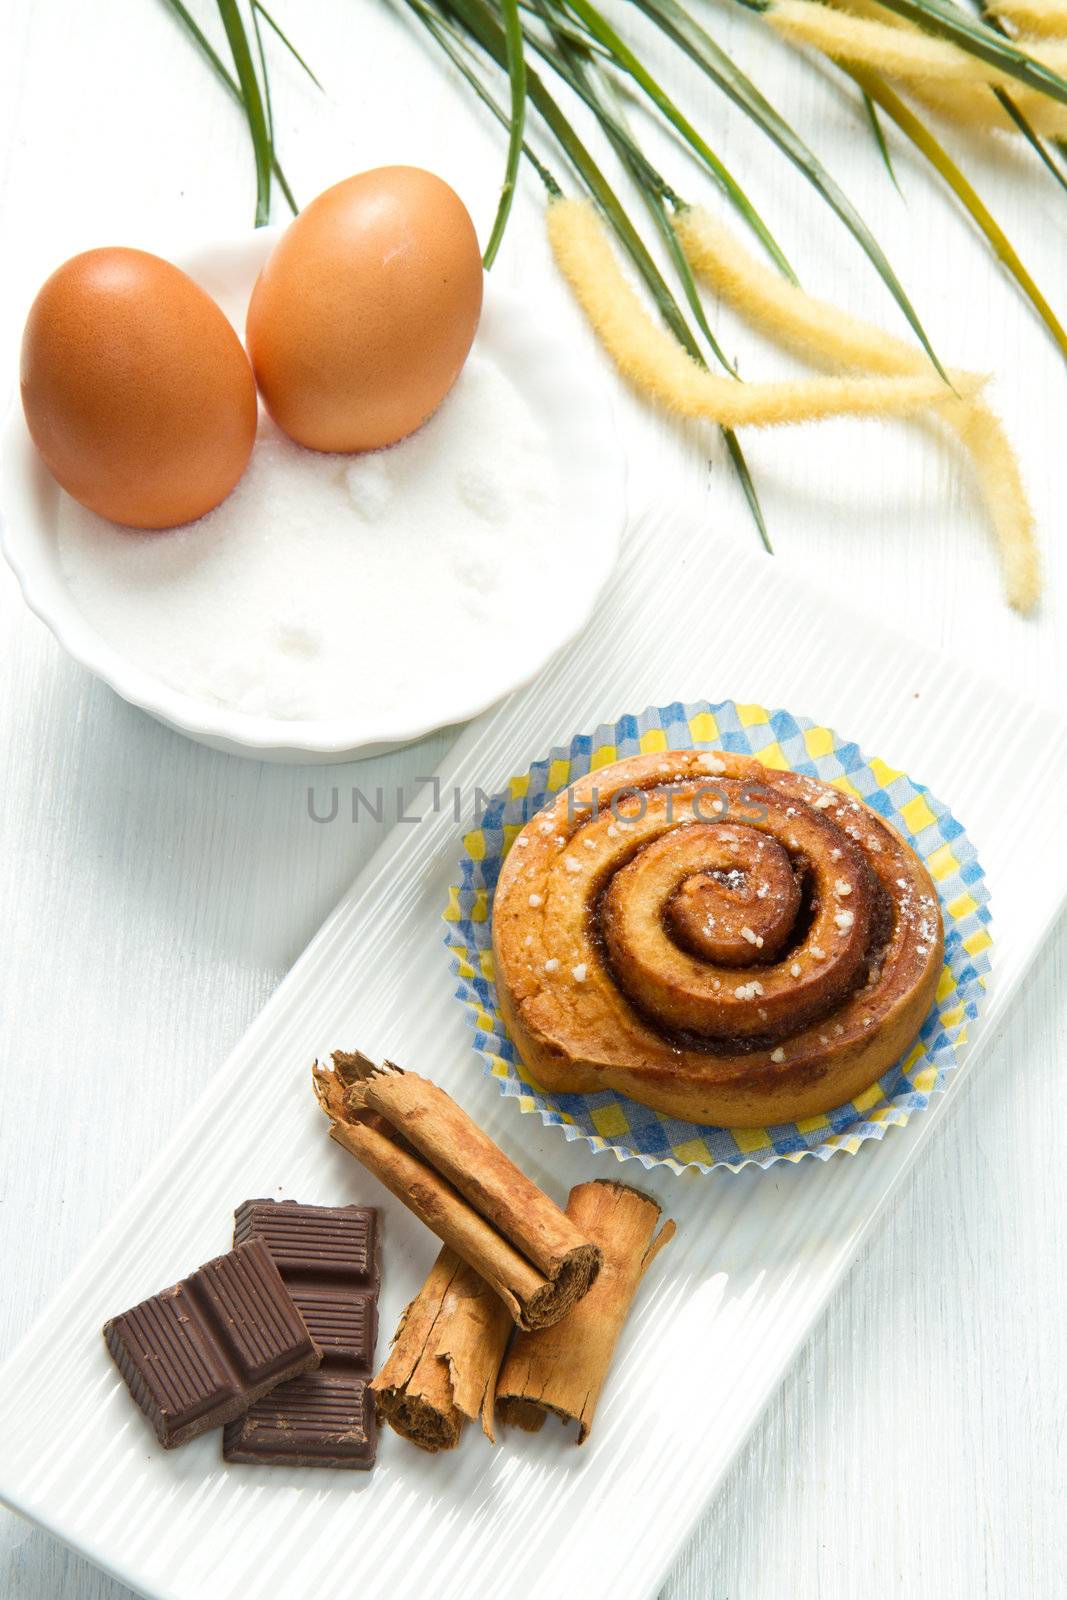 cinnamon pastry by lsantilli